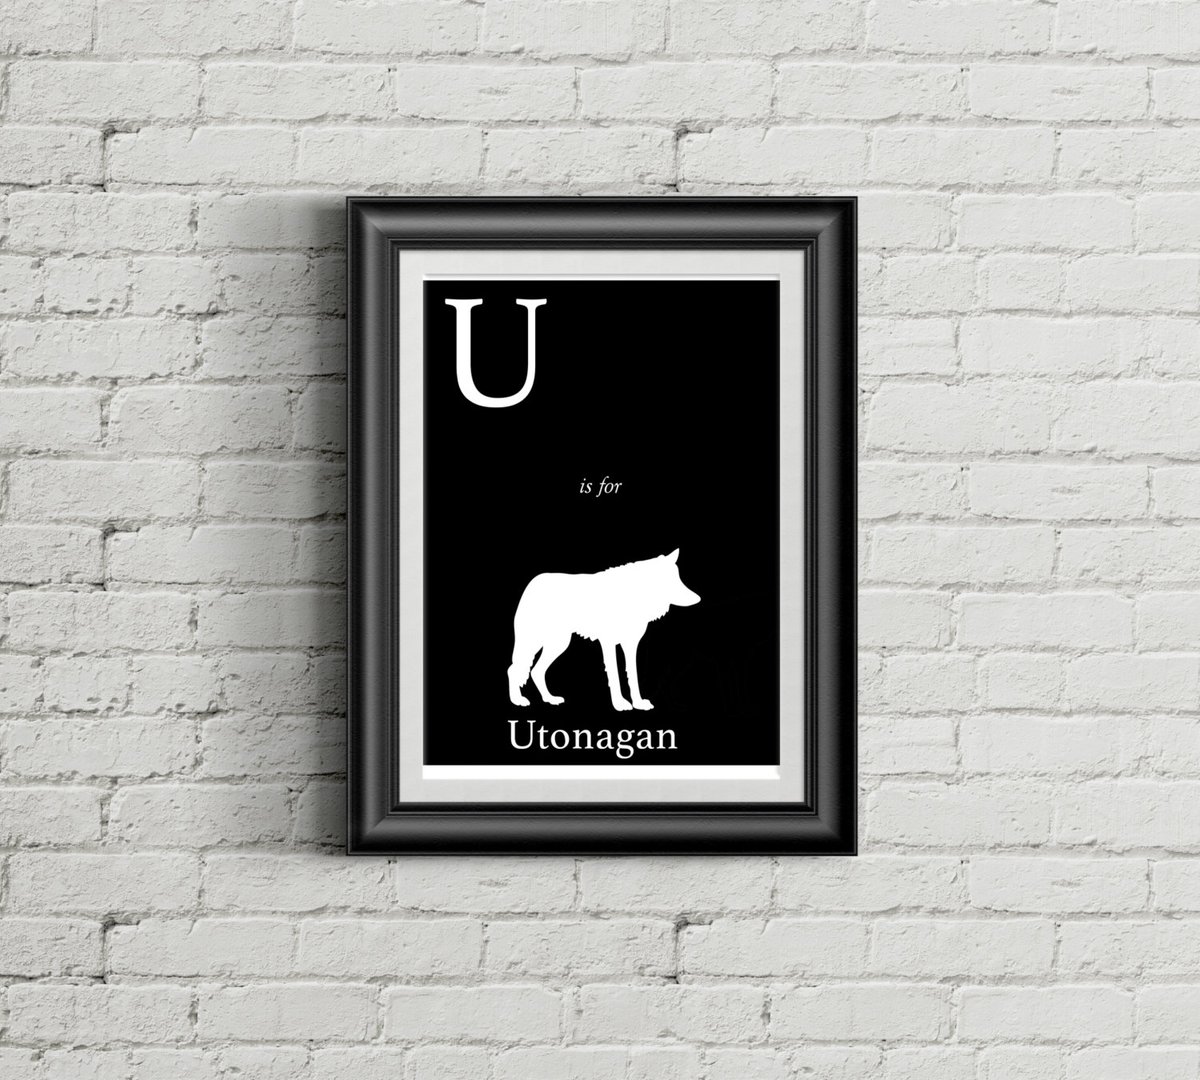 Alphabet Art Print - dog art print - U is for Utonagan Art Print - Modern Home Decor - dog silhouette art print - dog wall art - nursery art etsy.com/sophisticatedp… #fairewholesaler #doglover #sophisticatedpup #Etsy #dogs #doglovergifts #GraphicArtPrint